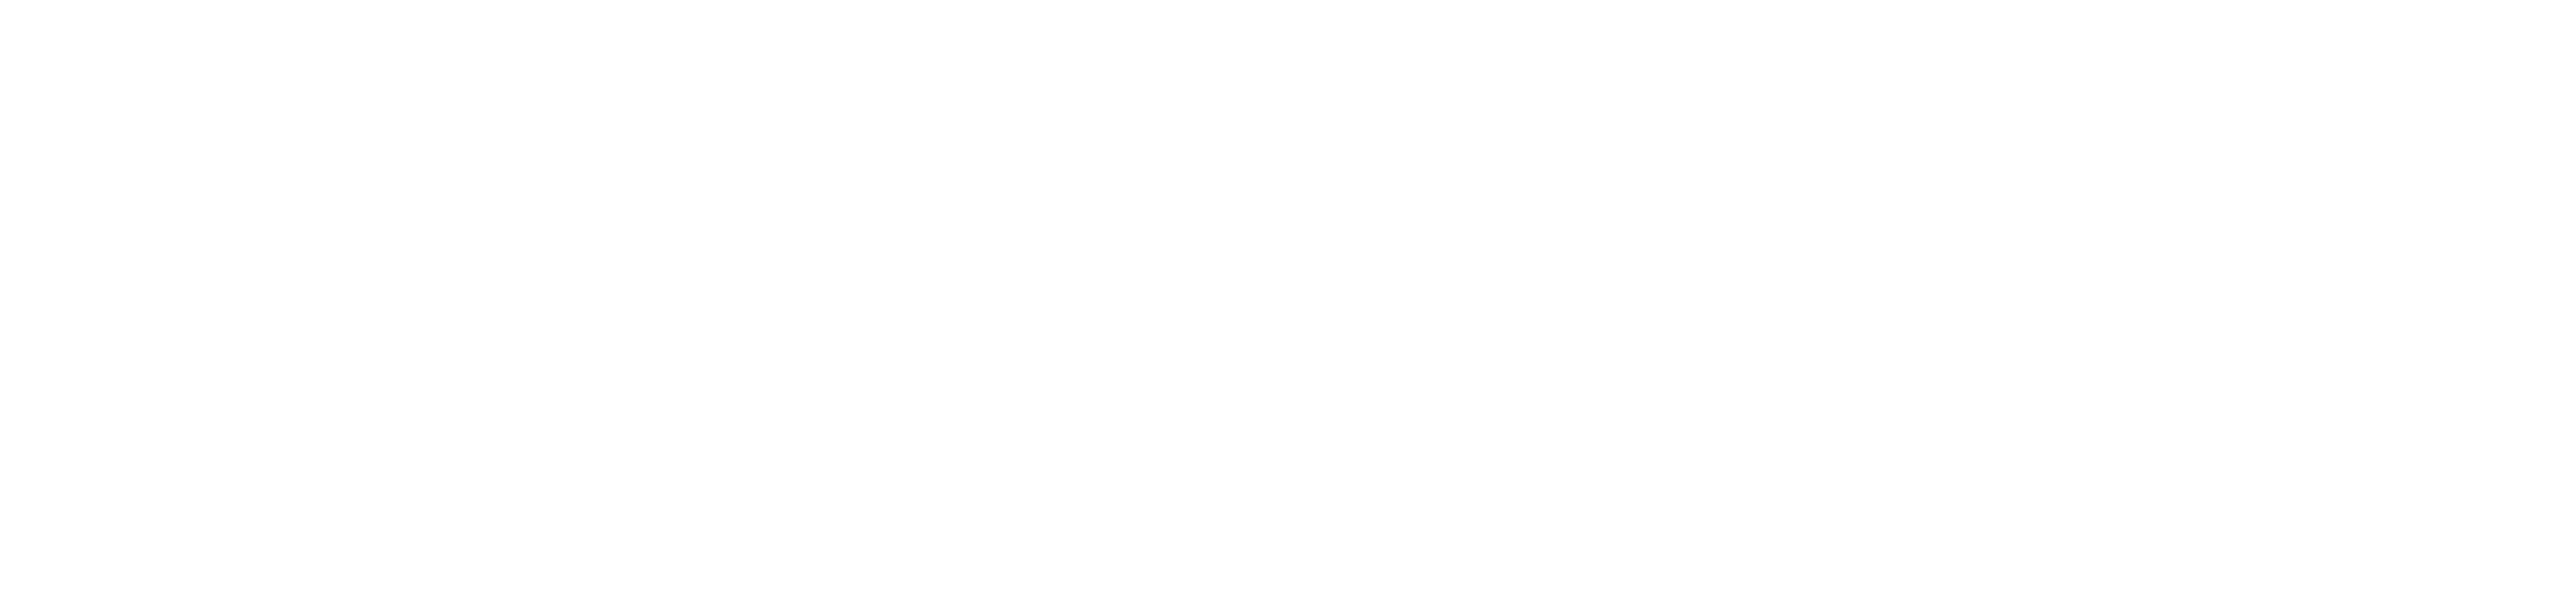 konnected logo white